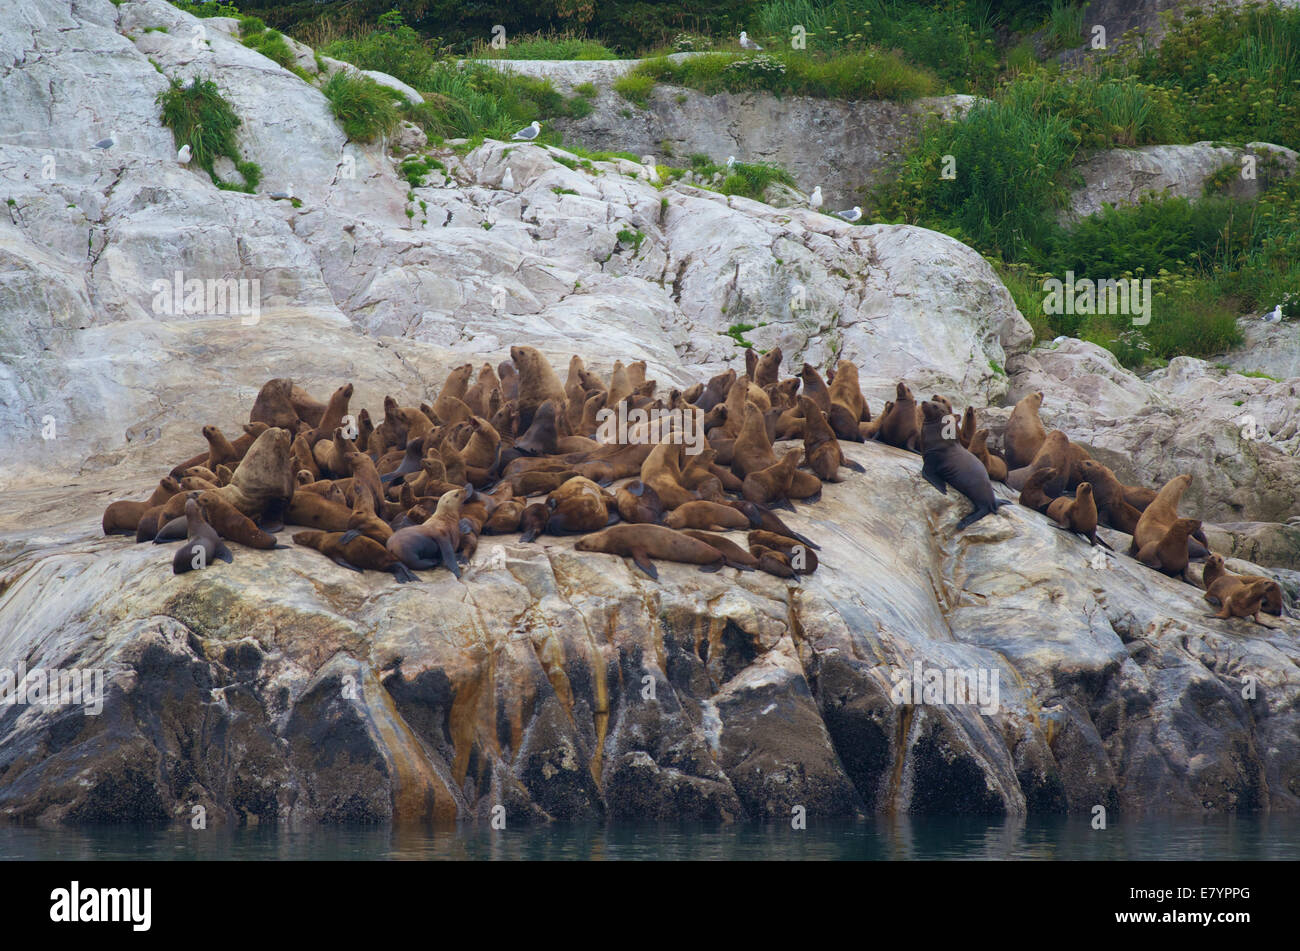 A colony of Steller Sea Lions (Eumetopias jubatus) on South Marble Island in Glacier Bay National Park, Alaska. Stock Photo